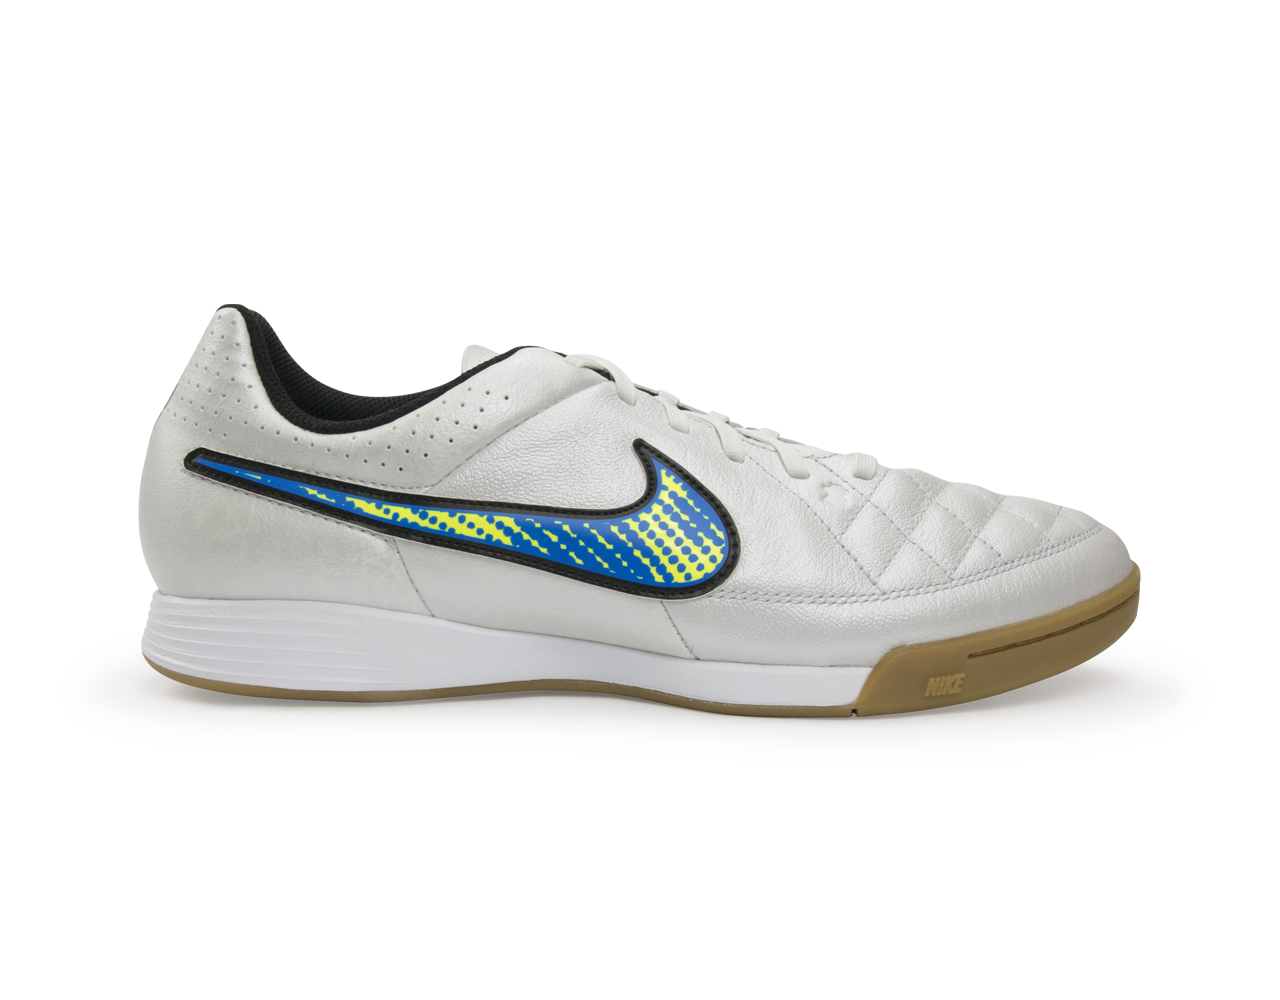 Hola Turista Alinear Nike Men's Tiempo Genio Leather Indoor Soccer Shoes White/Volt/Soar/Bl –  Azteca Soccer